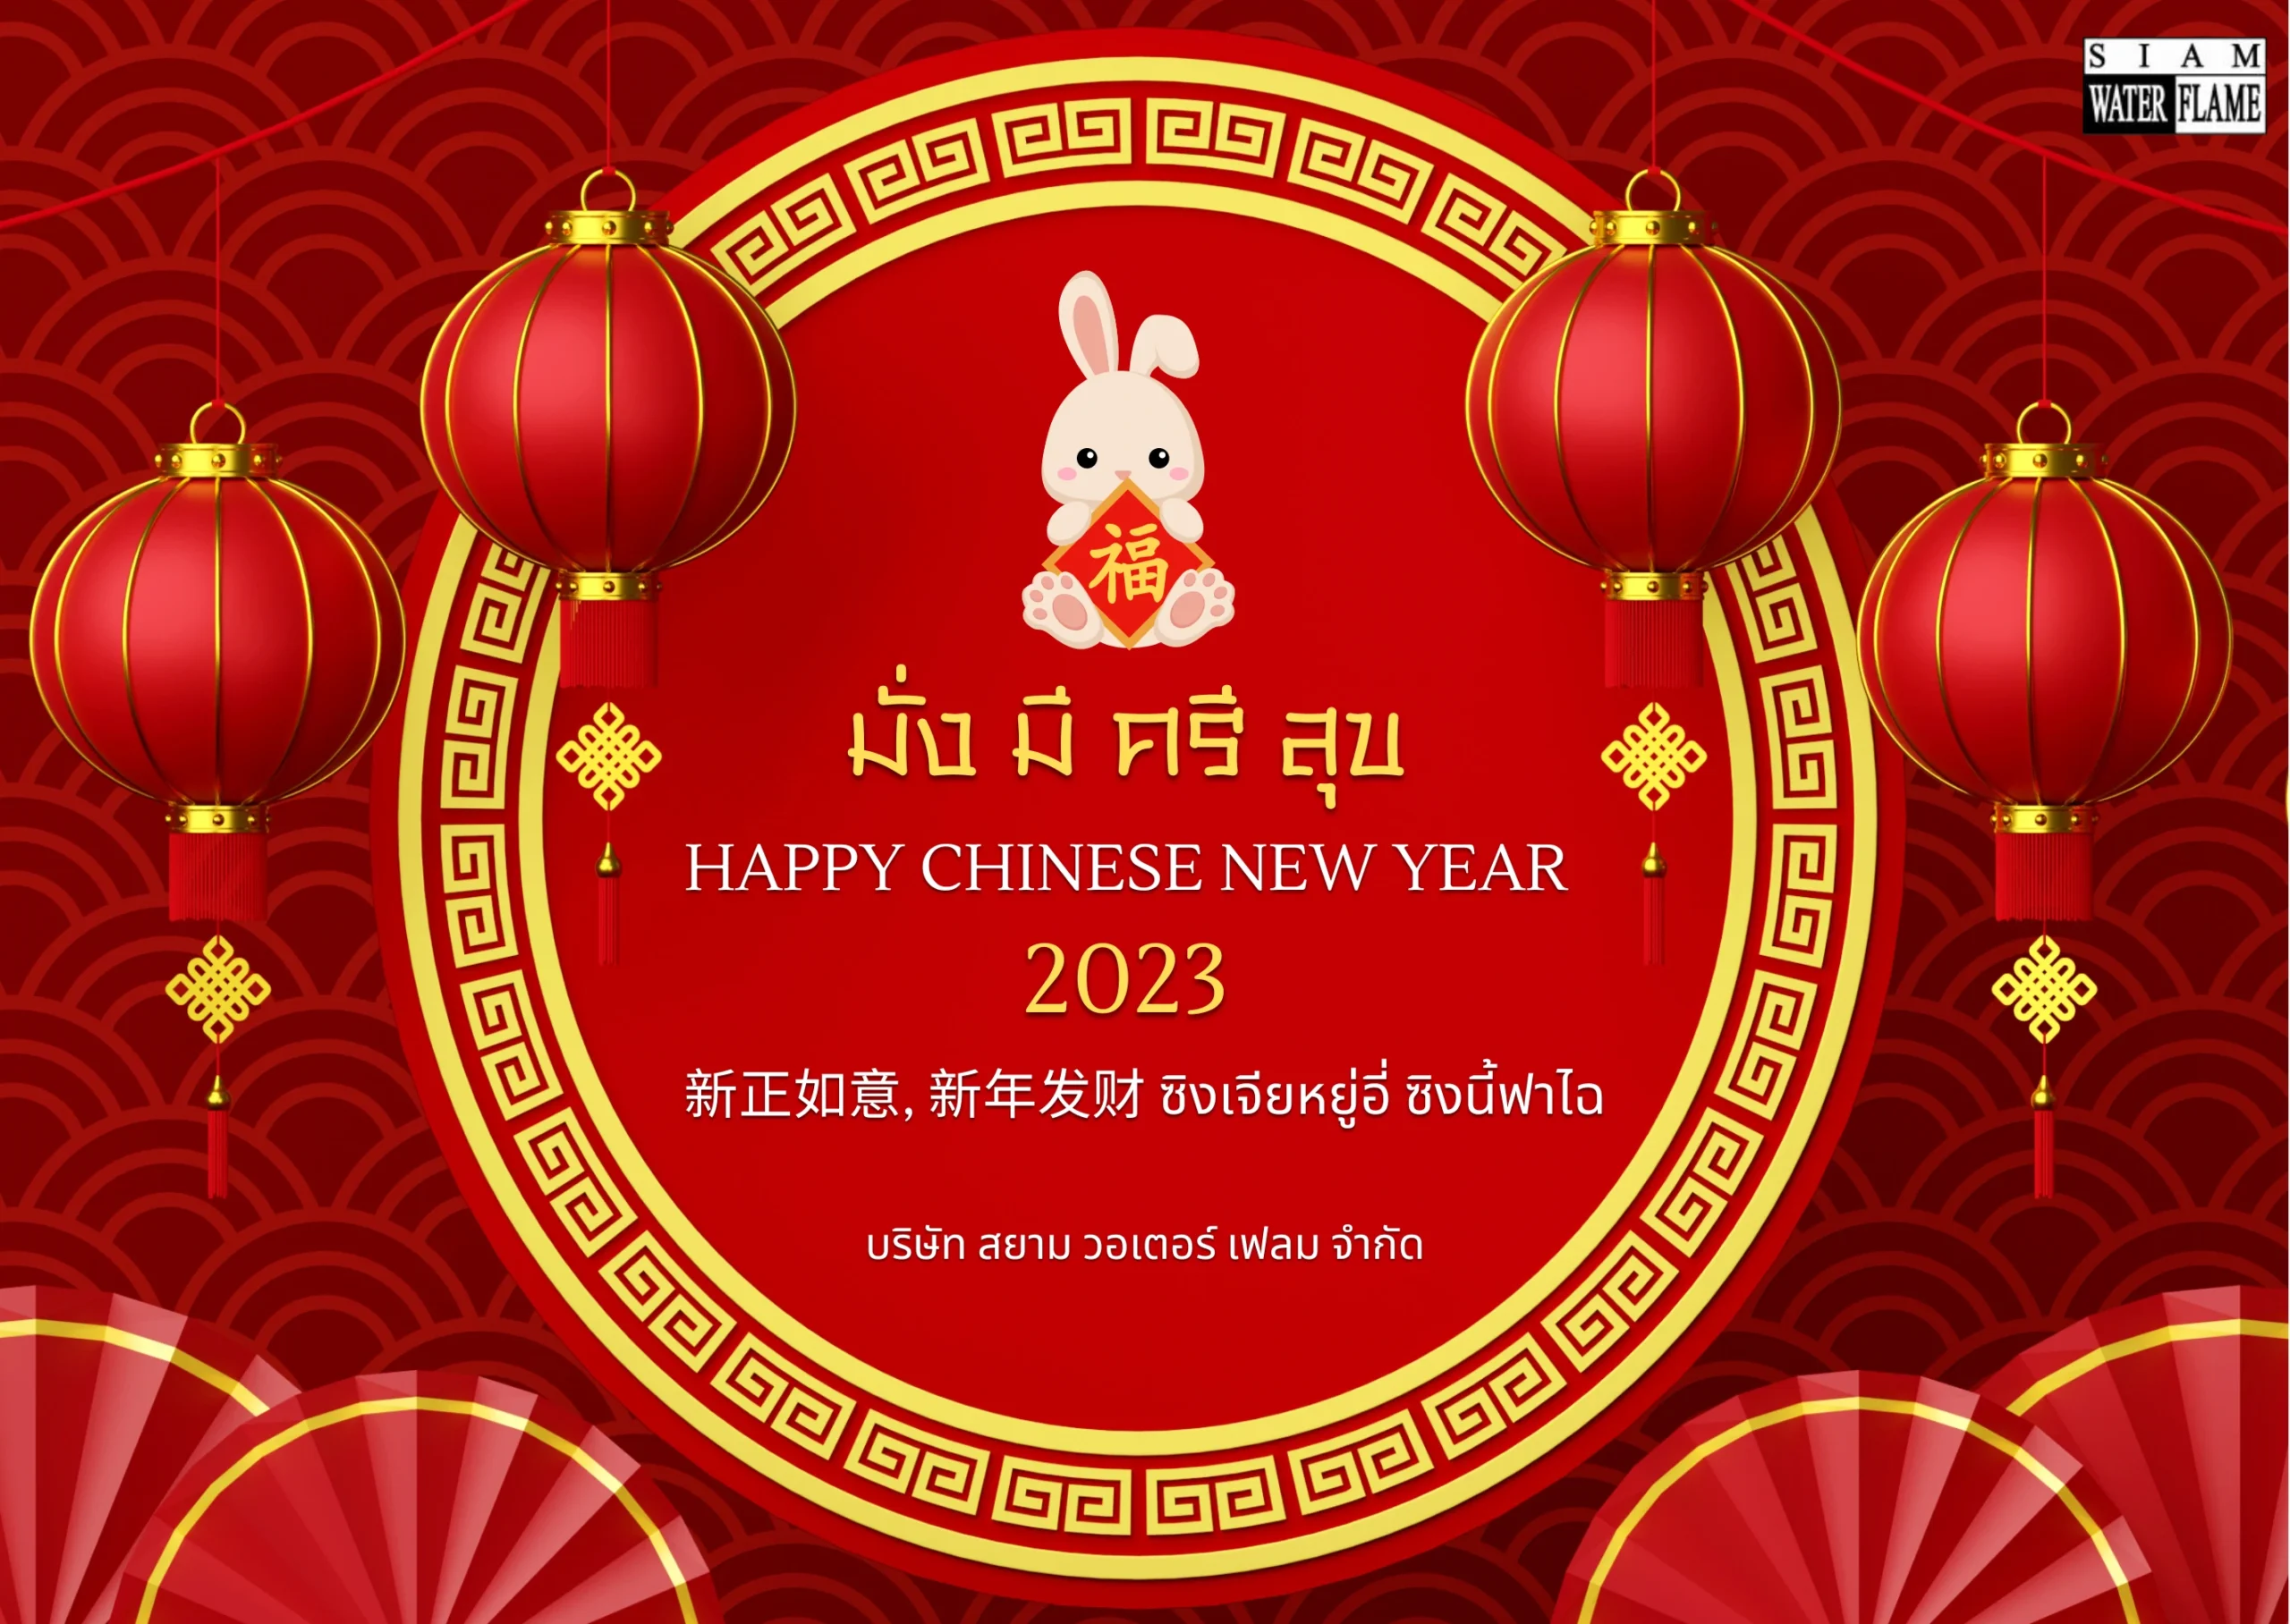 HAPPY CHINESE NEW YEAR 2023